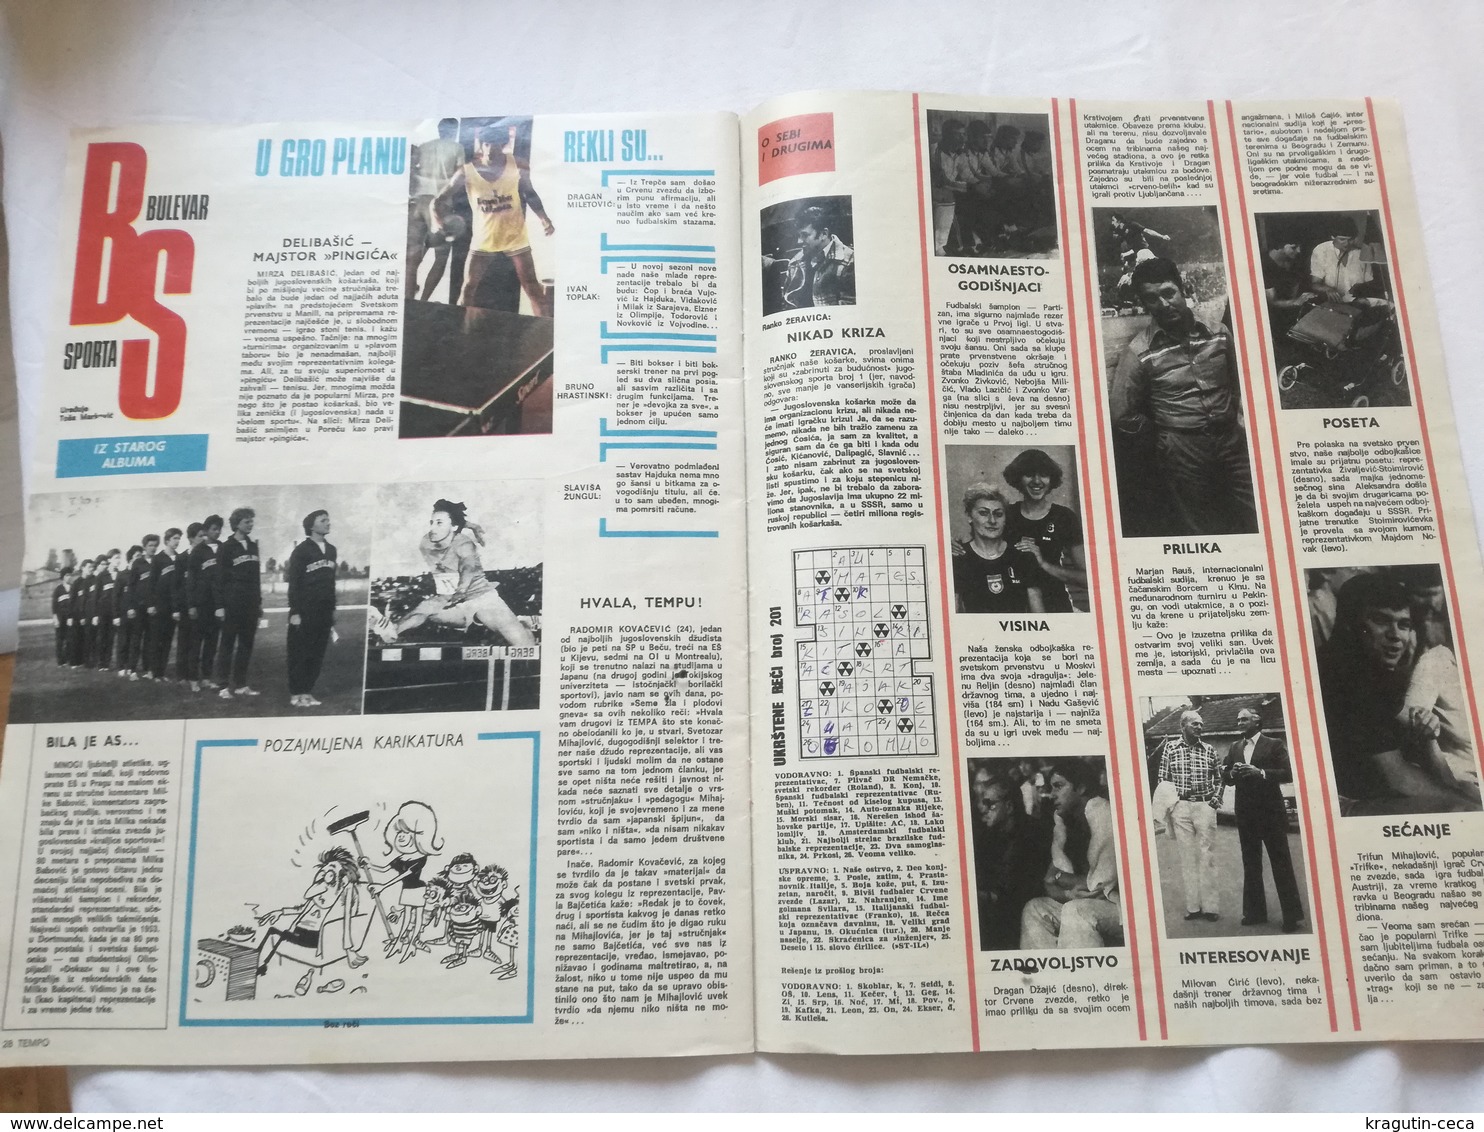 1978 TEMPO YUGOSLAVIA SERBIA SPORT FOOTBALL MAGAZINE NEWSPAPERS Steve Zungul HAJDUK PARTIZAN SANTRAC STEKIC ATHLETICS